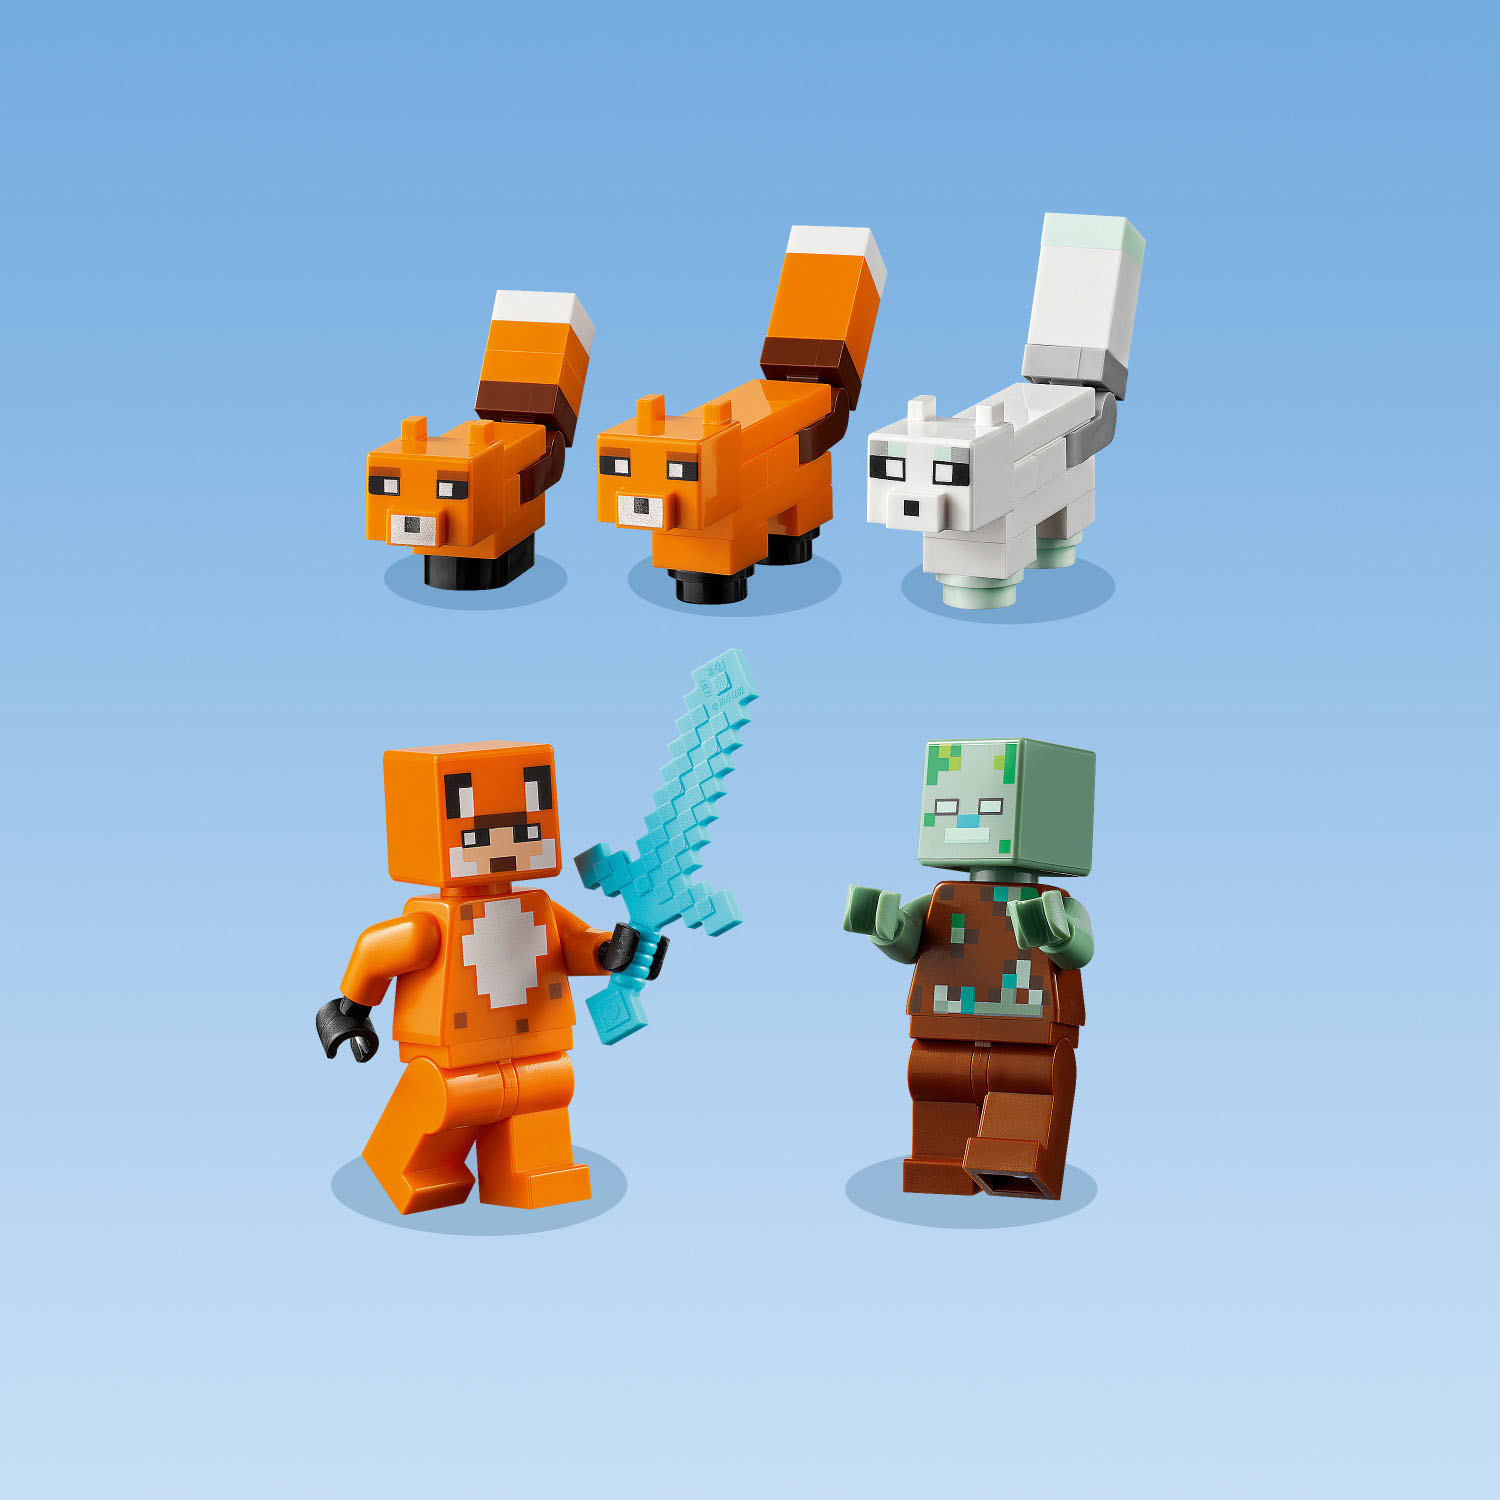 LEGO Minecraft The Fox Lodge 21178 6379562 - Best Buy